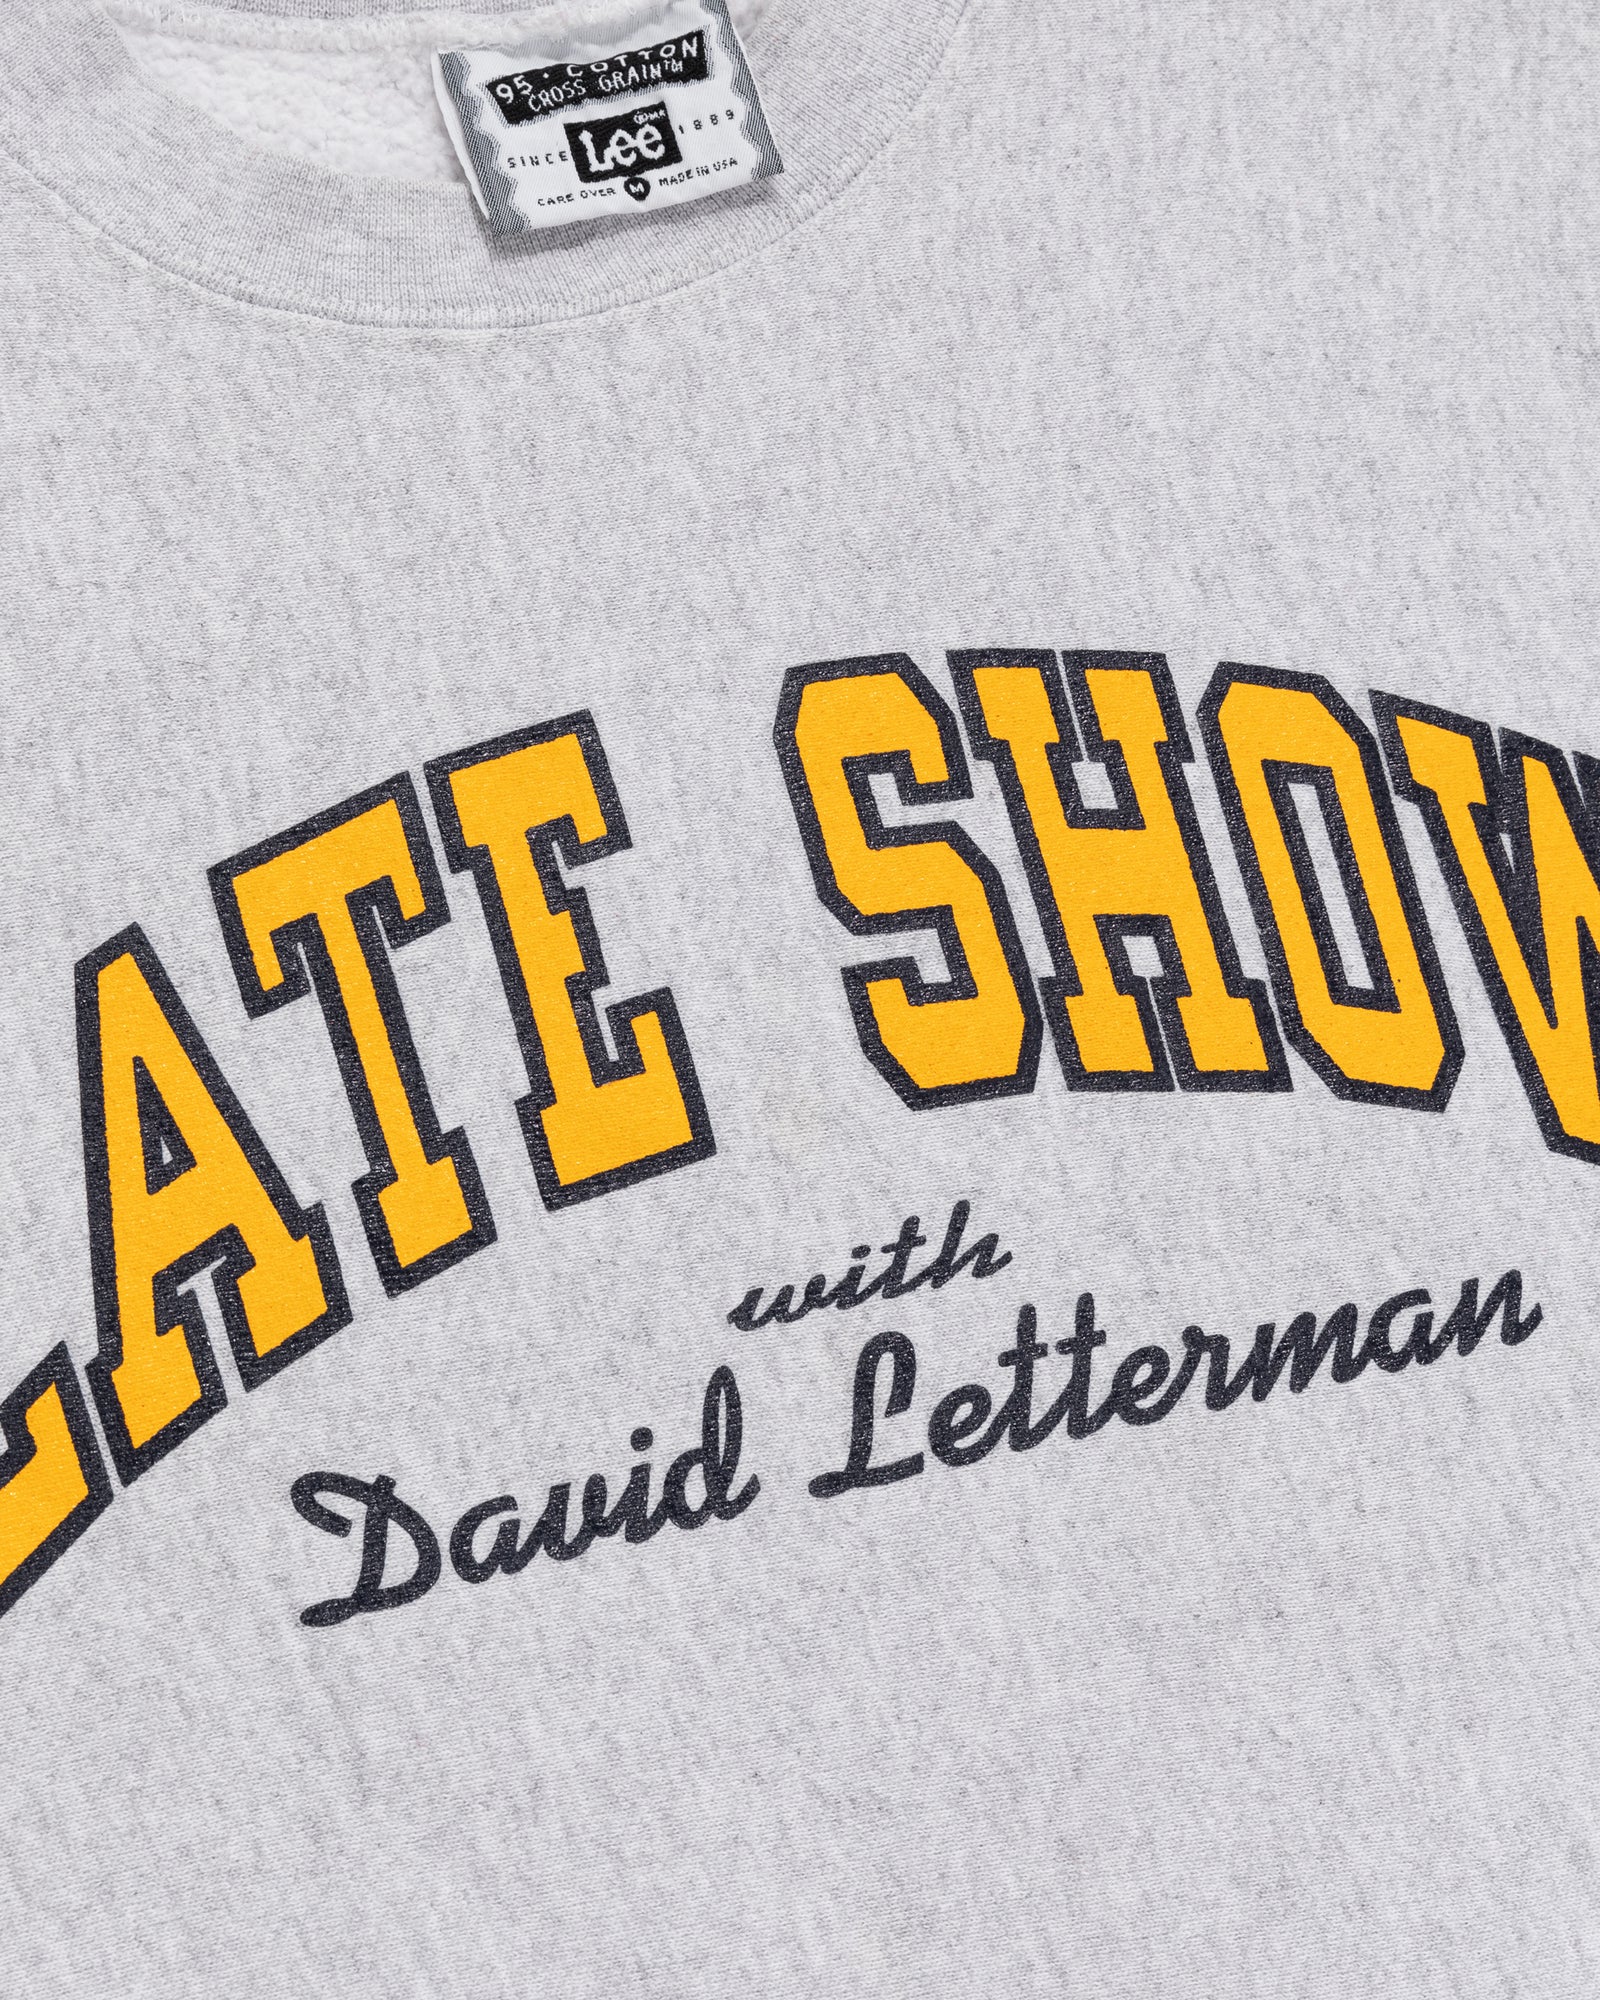 Vintage Late Show Sweatshirt